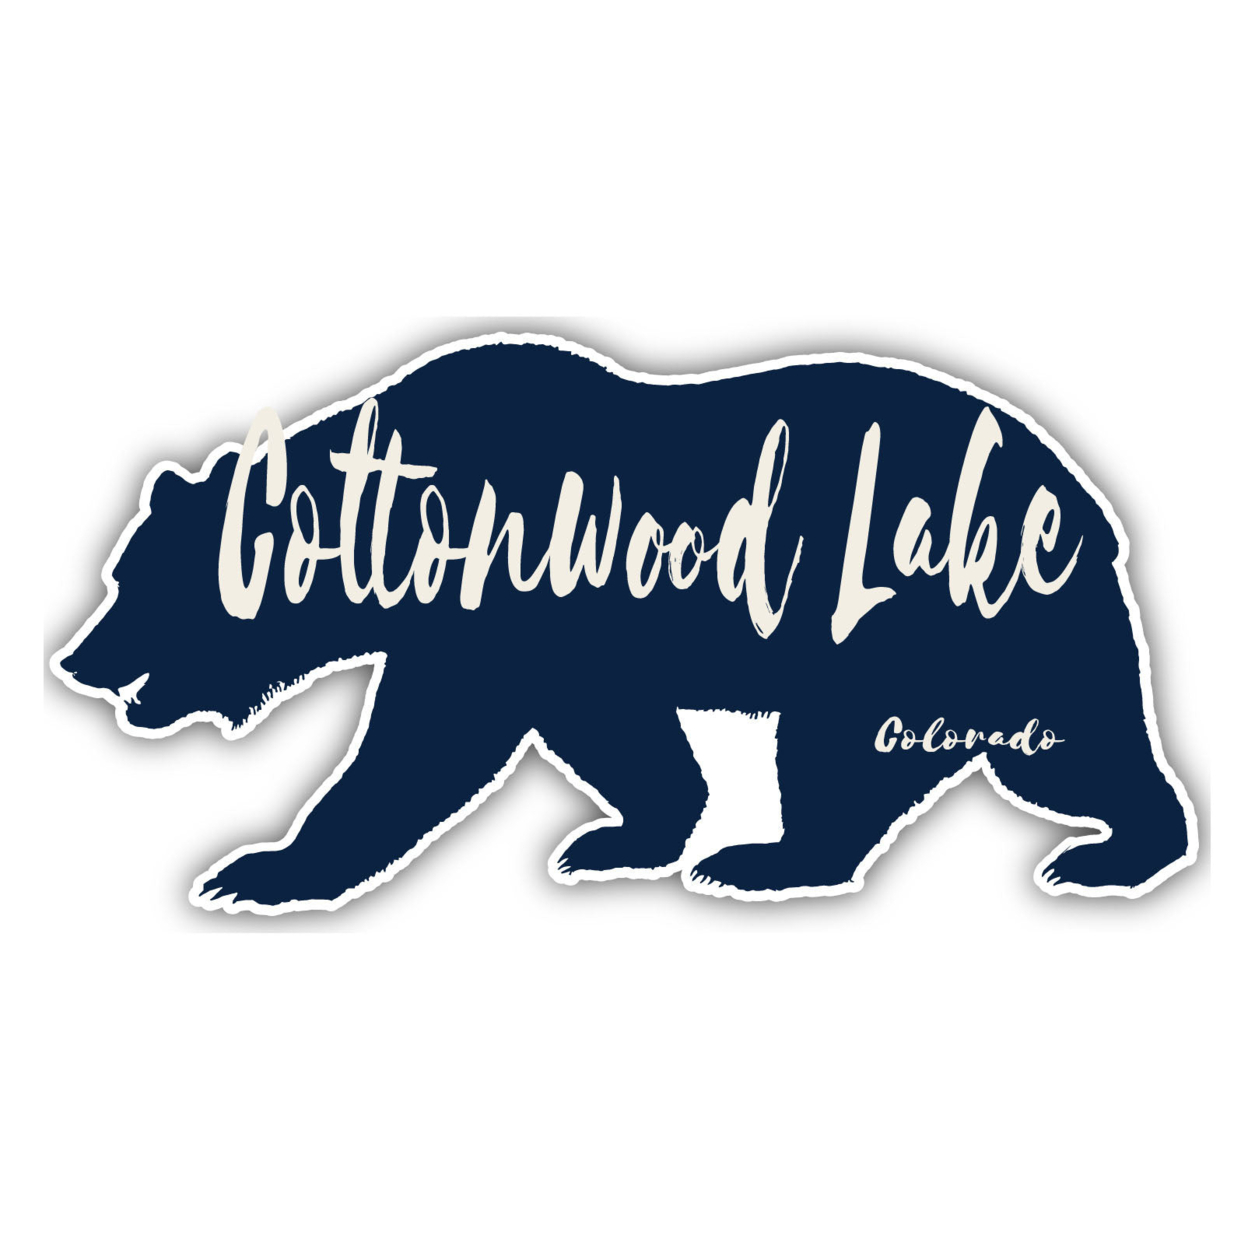 Cottonwood Lake Colorado Souvenir Decorative Stickers (Choose Theme And Size) - Single Unit, 8-Inch, Bear